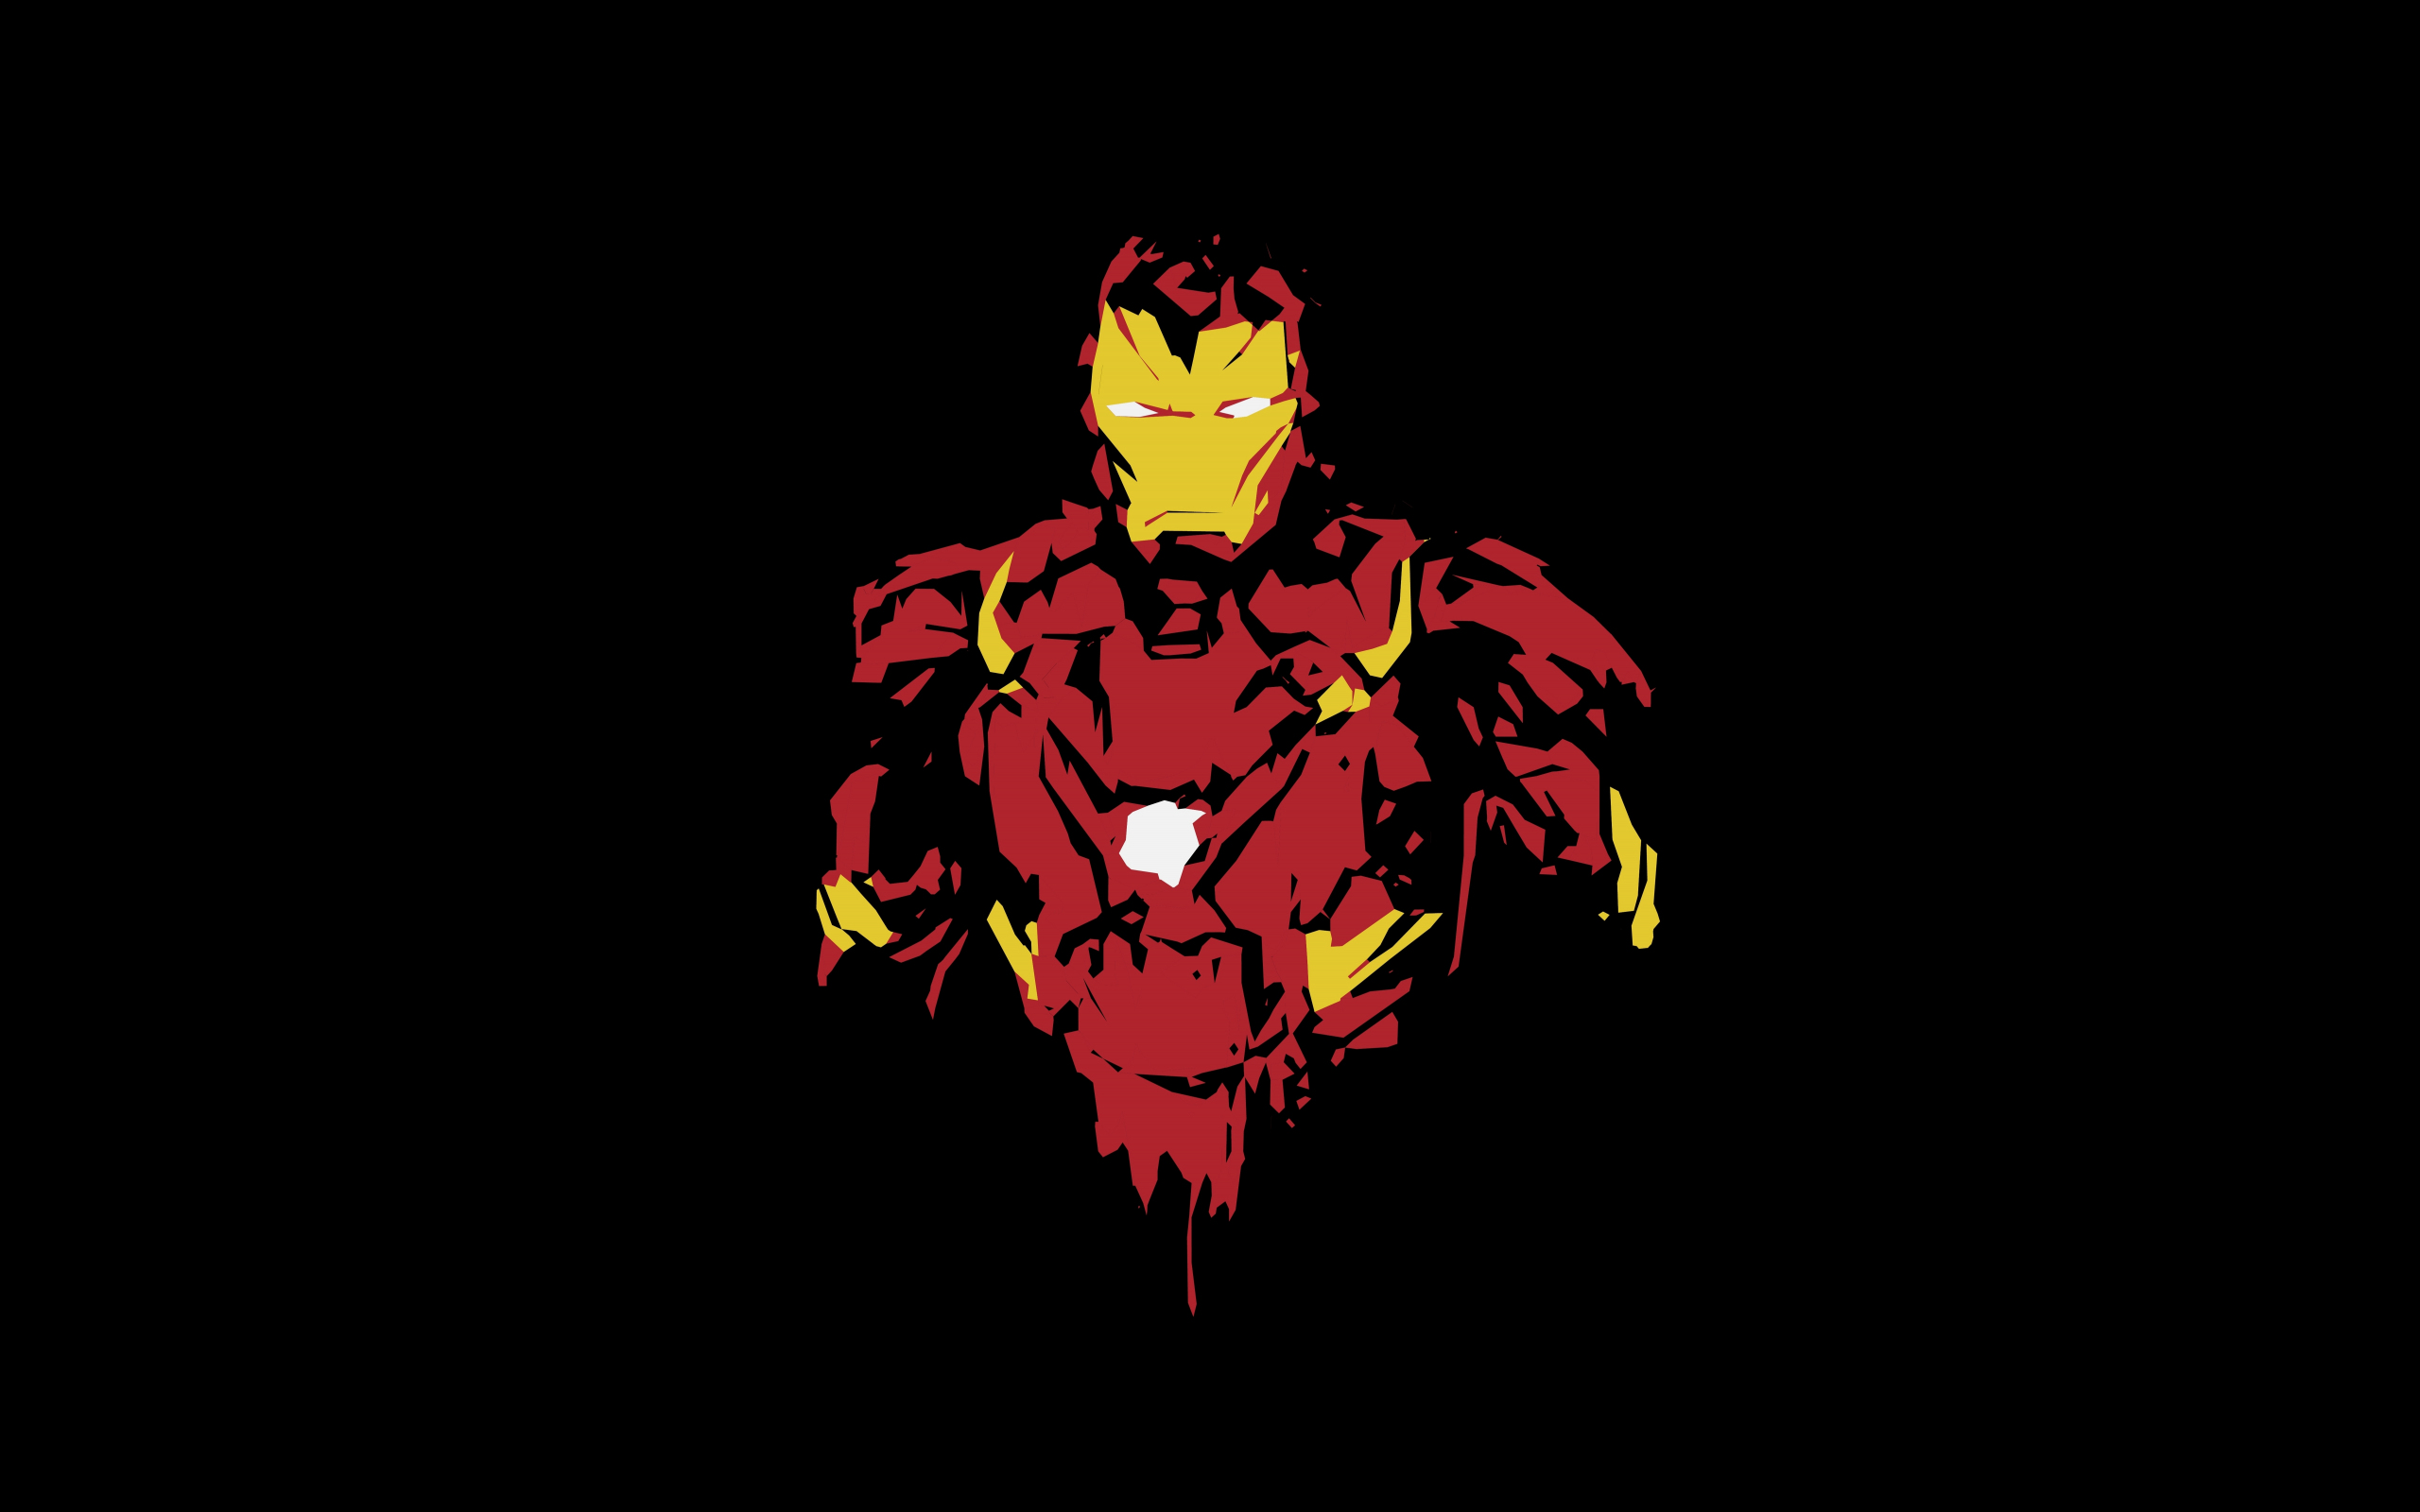 100+] Iron Man Phone Wallpapers | Wallpapers.com